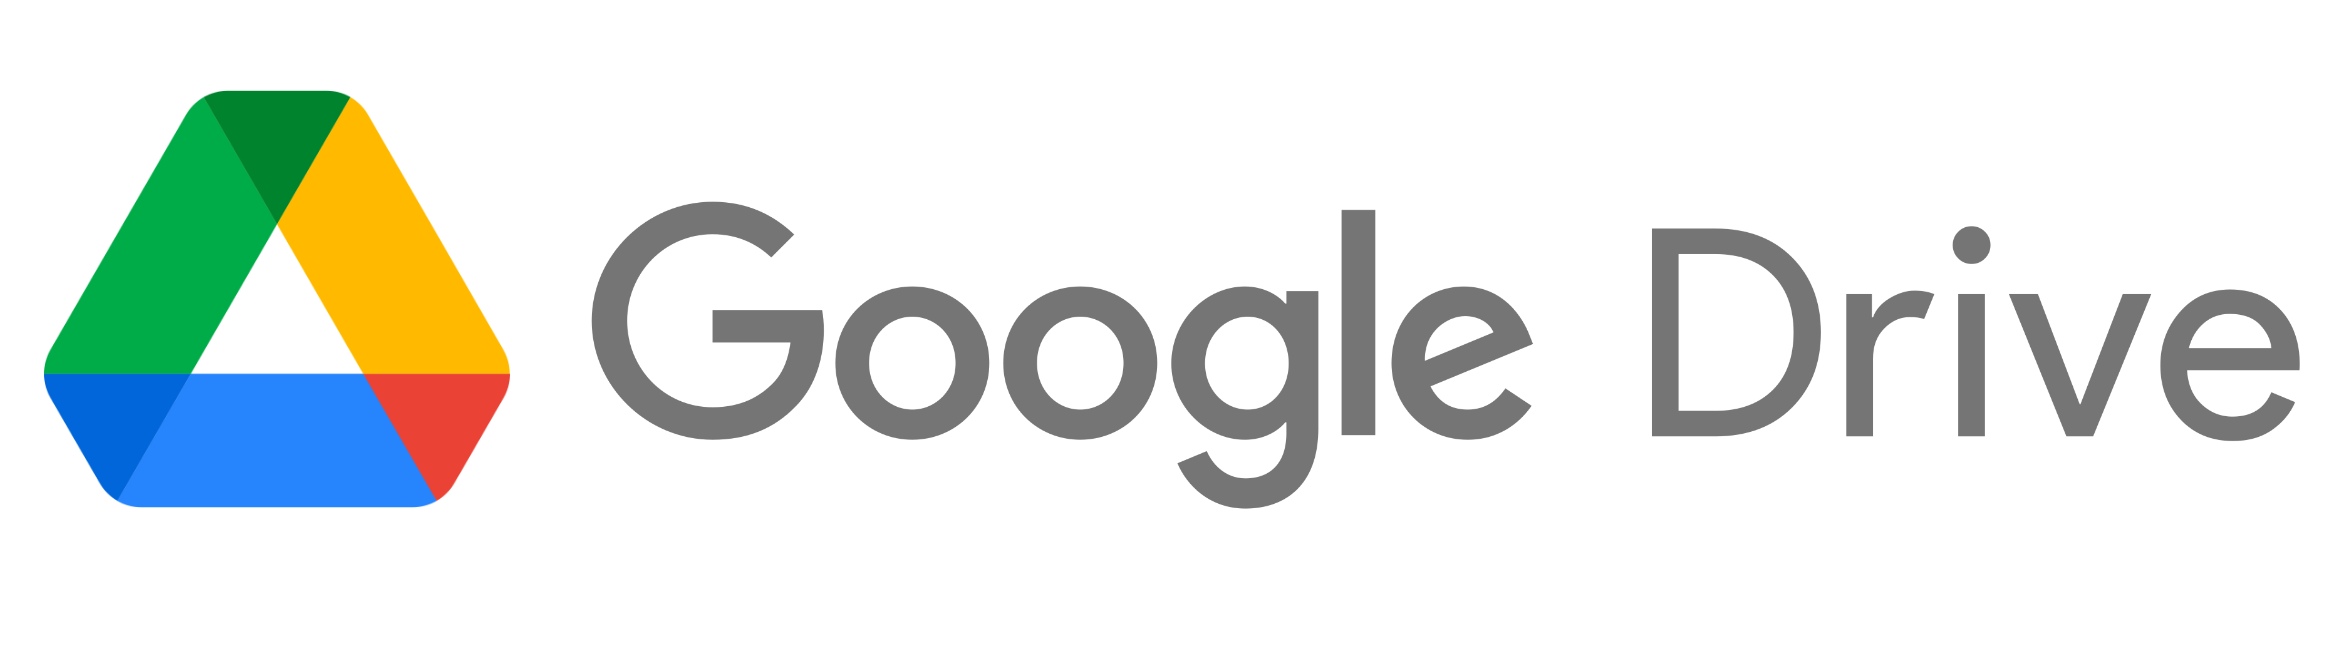 Google Drive logo PNG, transparent png download